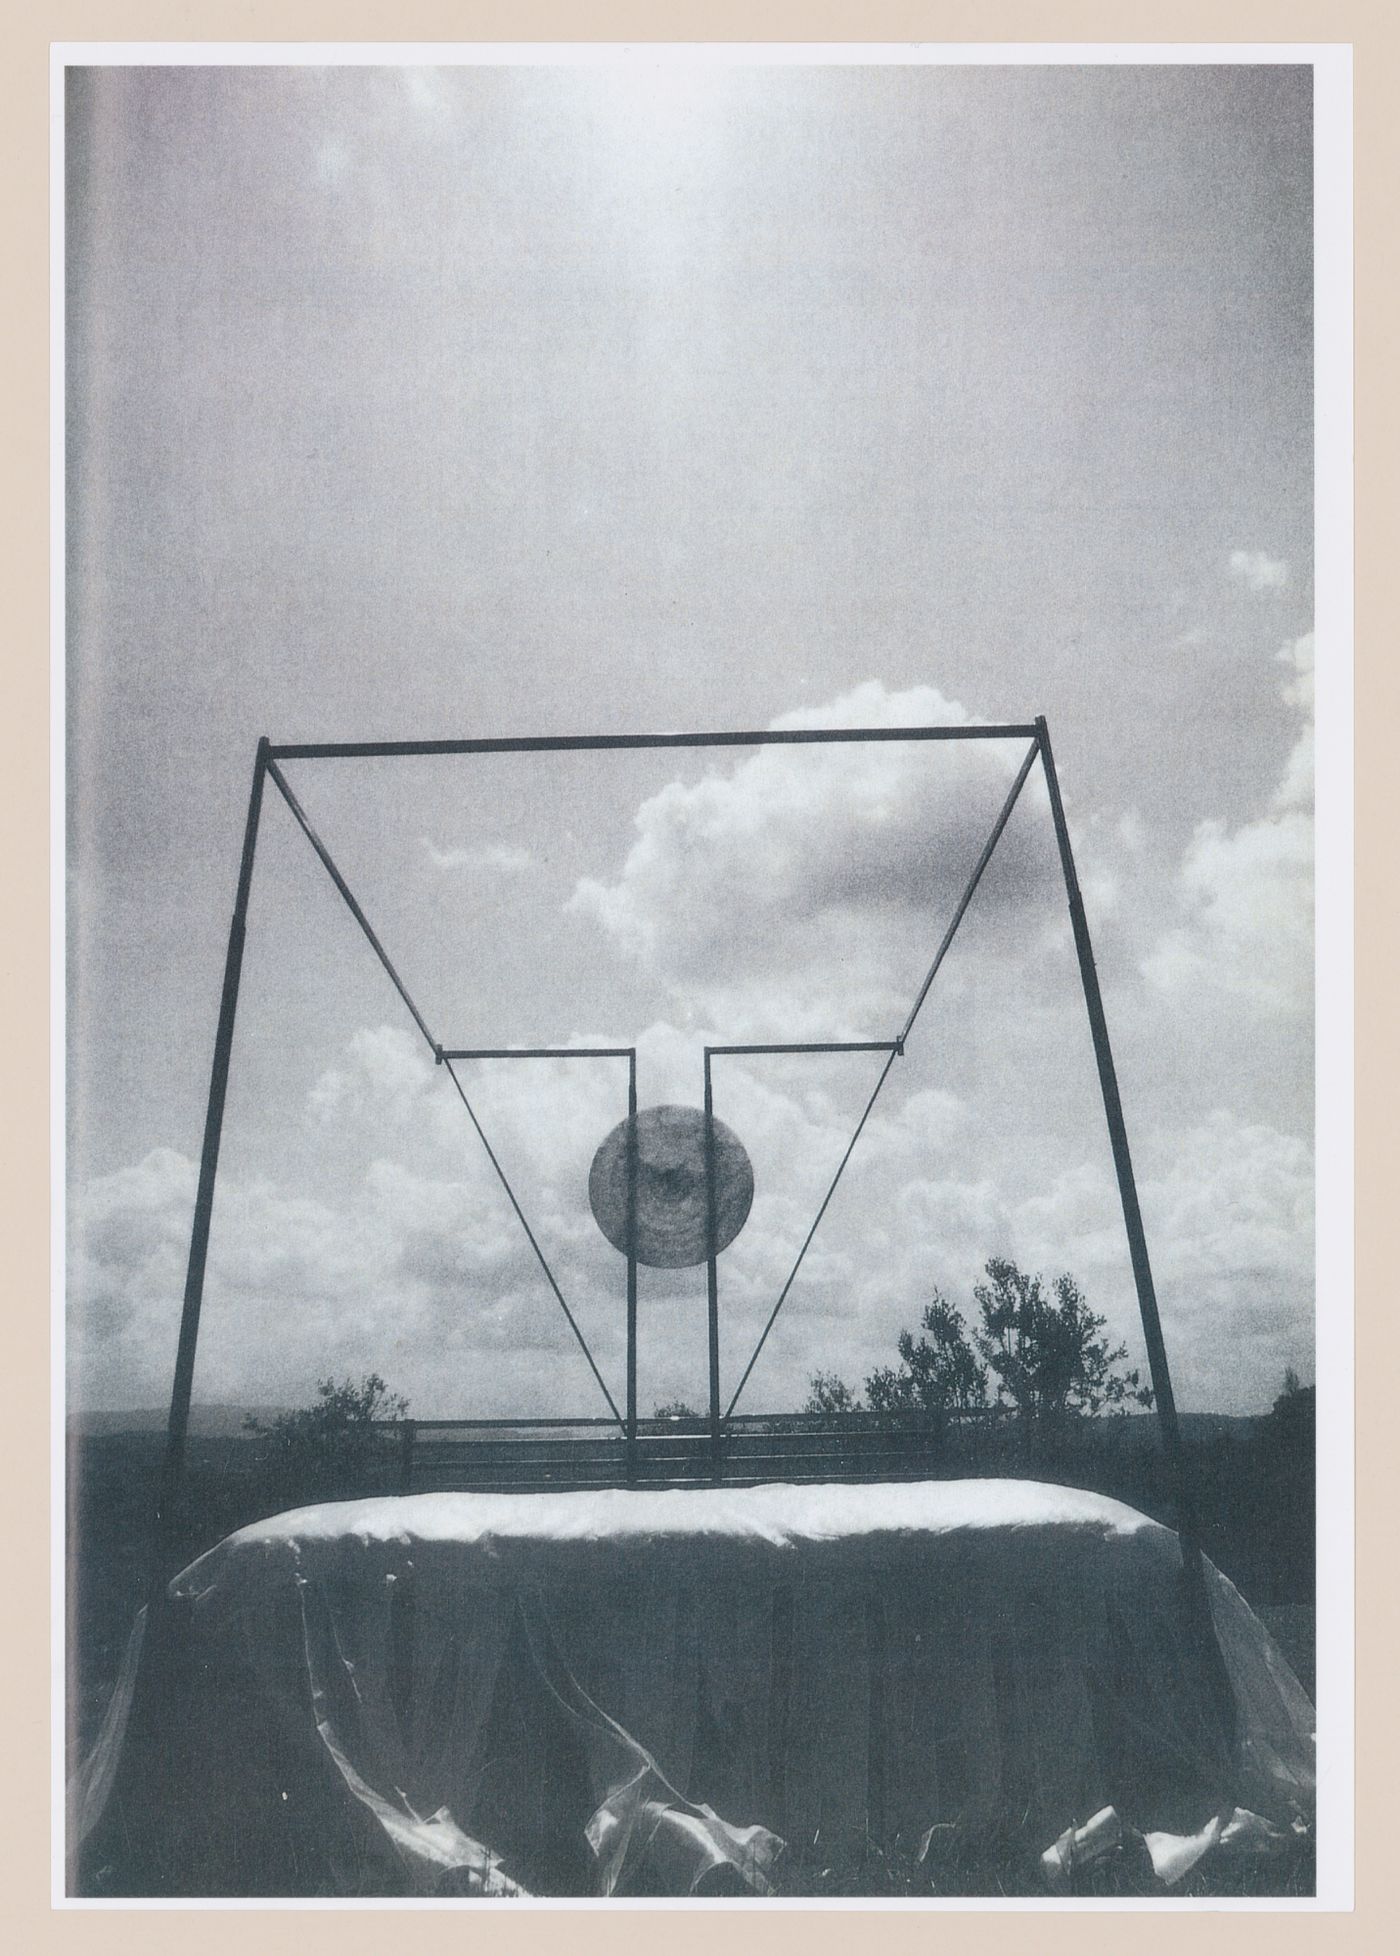 Photograph for Bed project Il carro di giove [Jupiter's chariot]